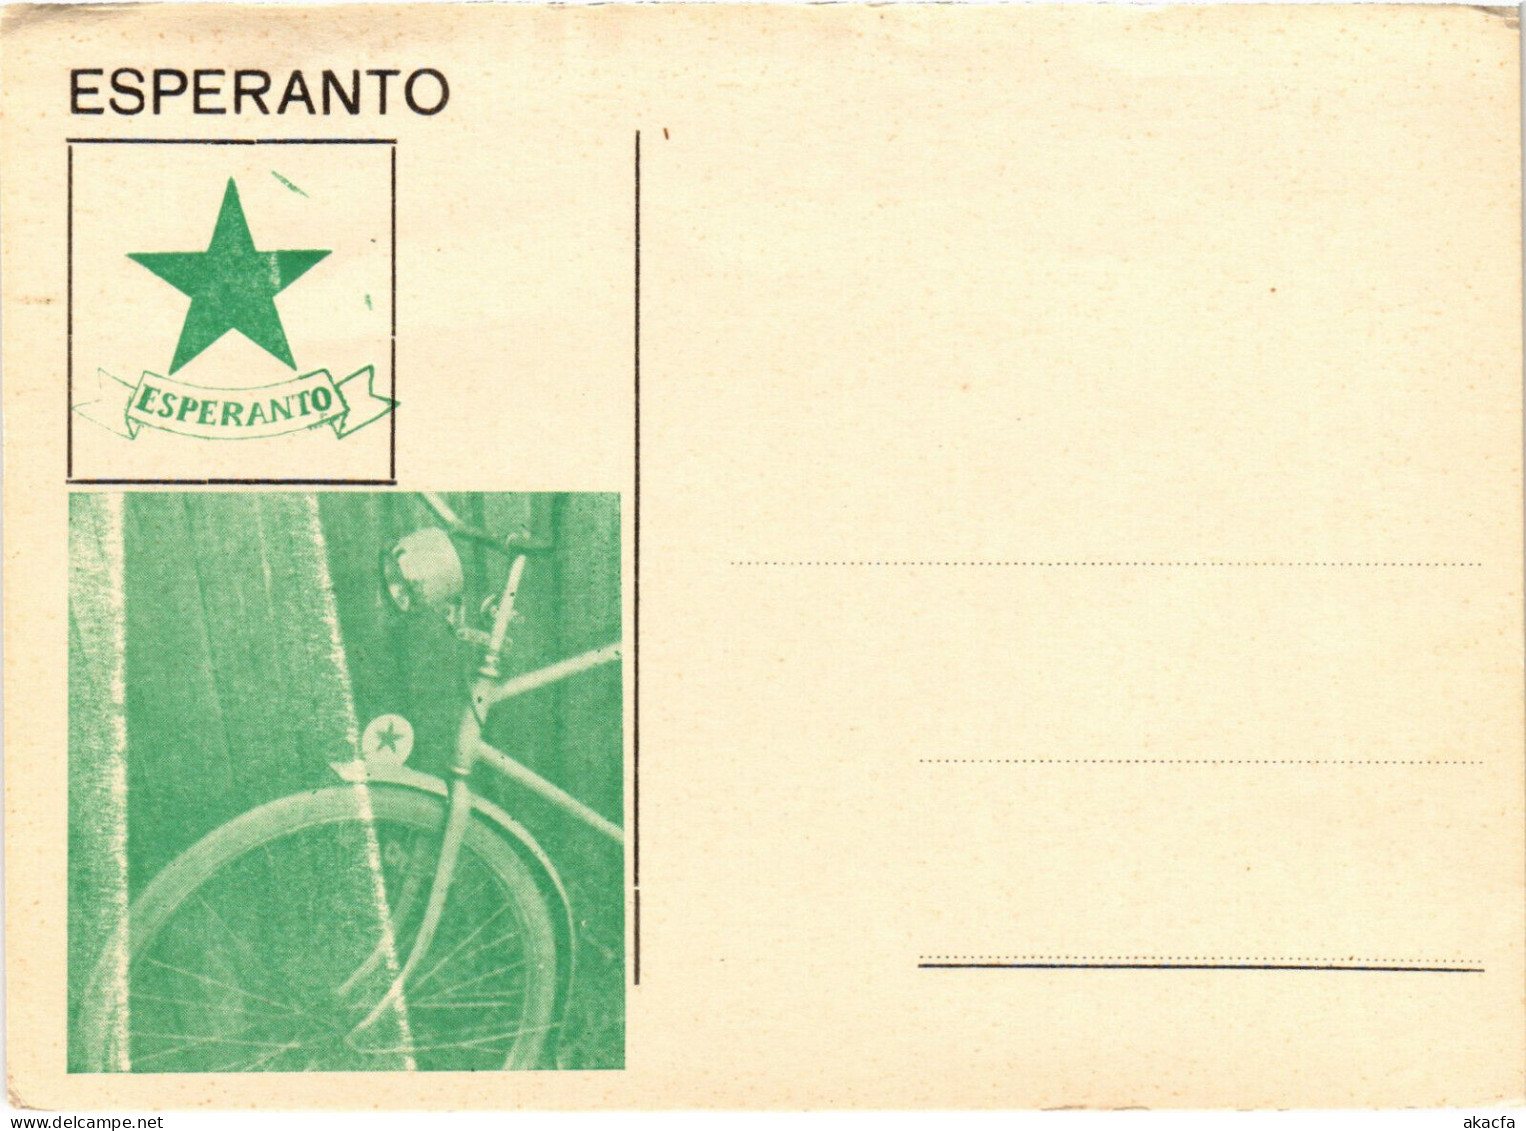 PC ESPERANTO, ESPERANTO ADVERTISING, BICYCLE, Vintage Postcard (b53238) - Esperanto